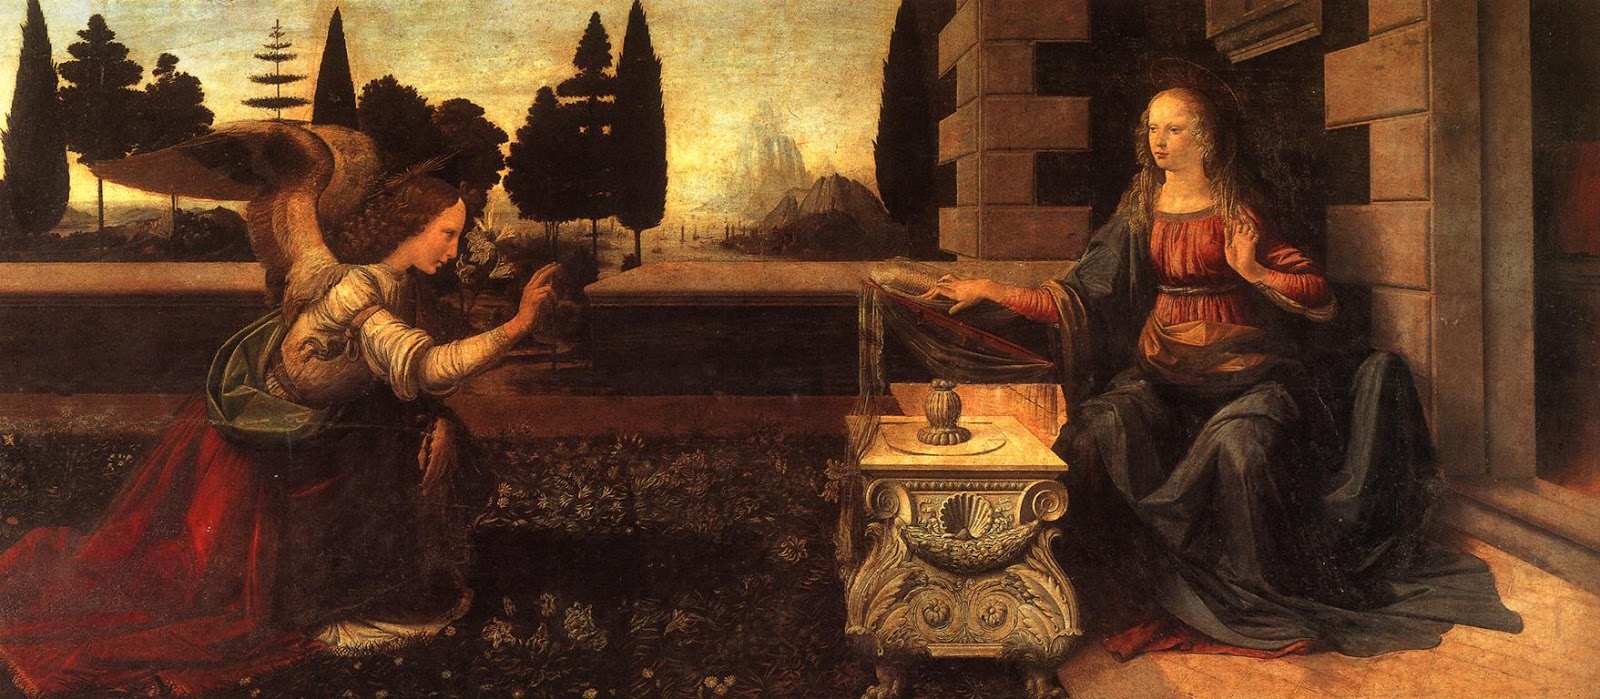 Leonardo+da+Vinci-1452-1519 (951).jpg